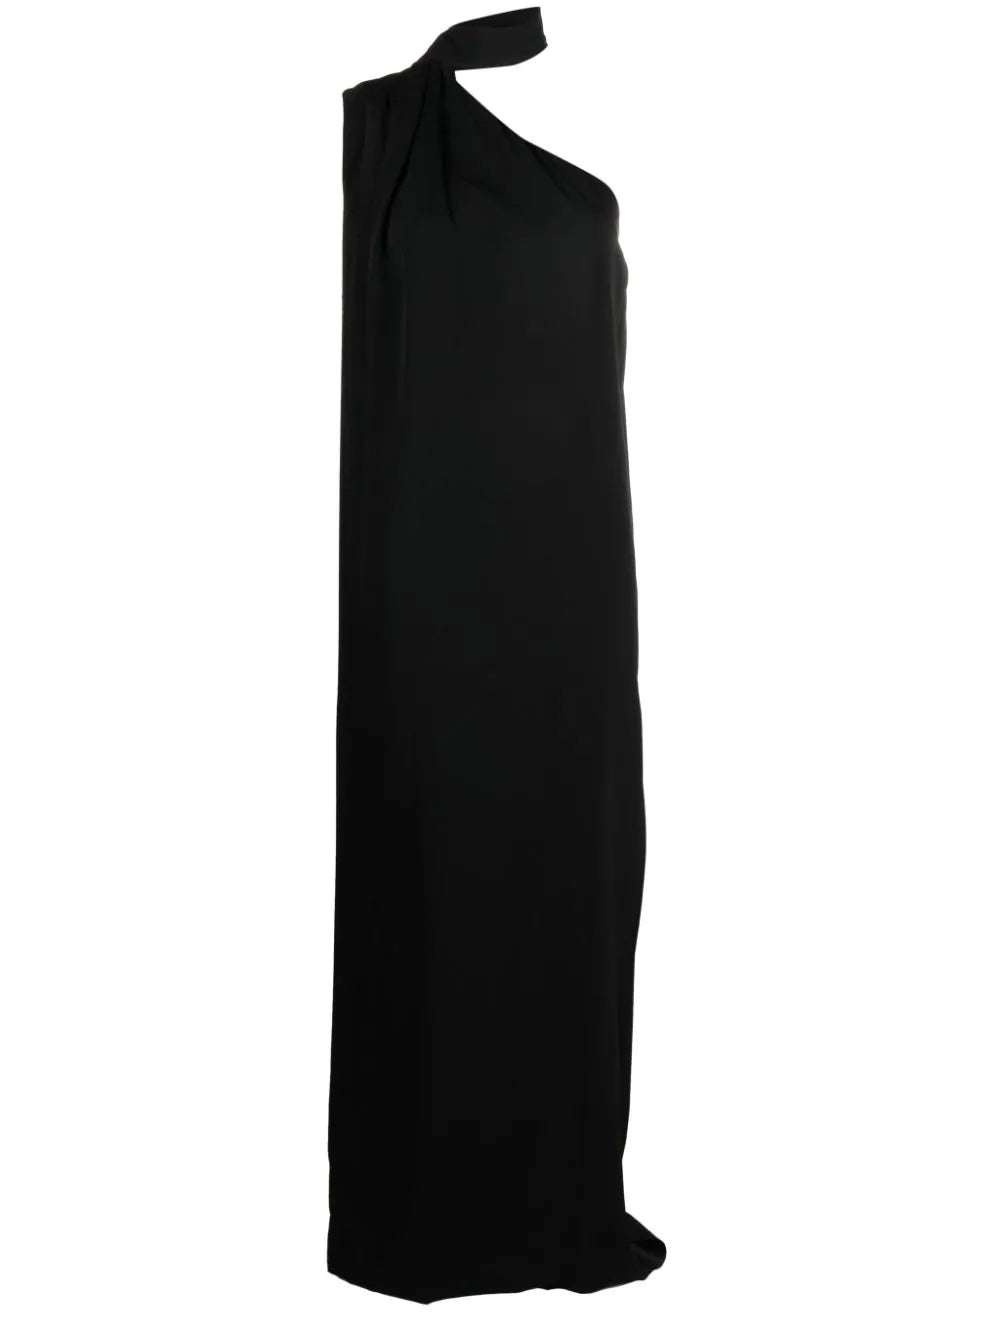 Scarf long Dress, black